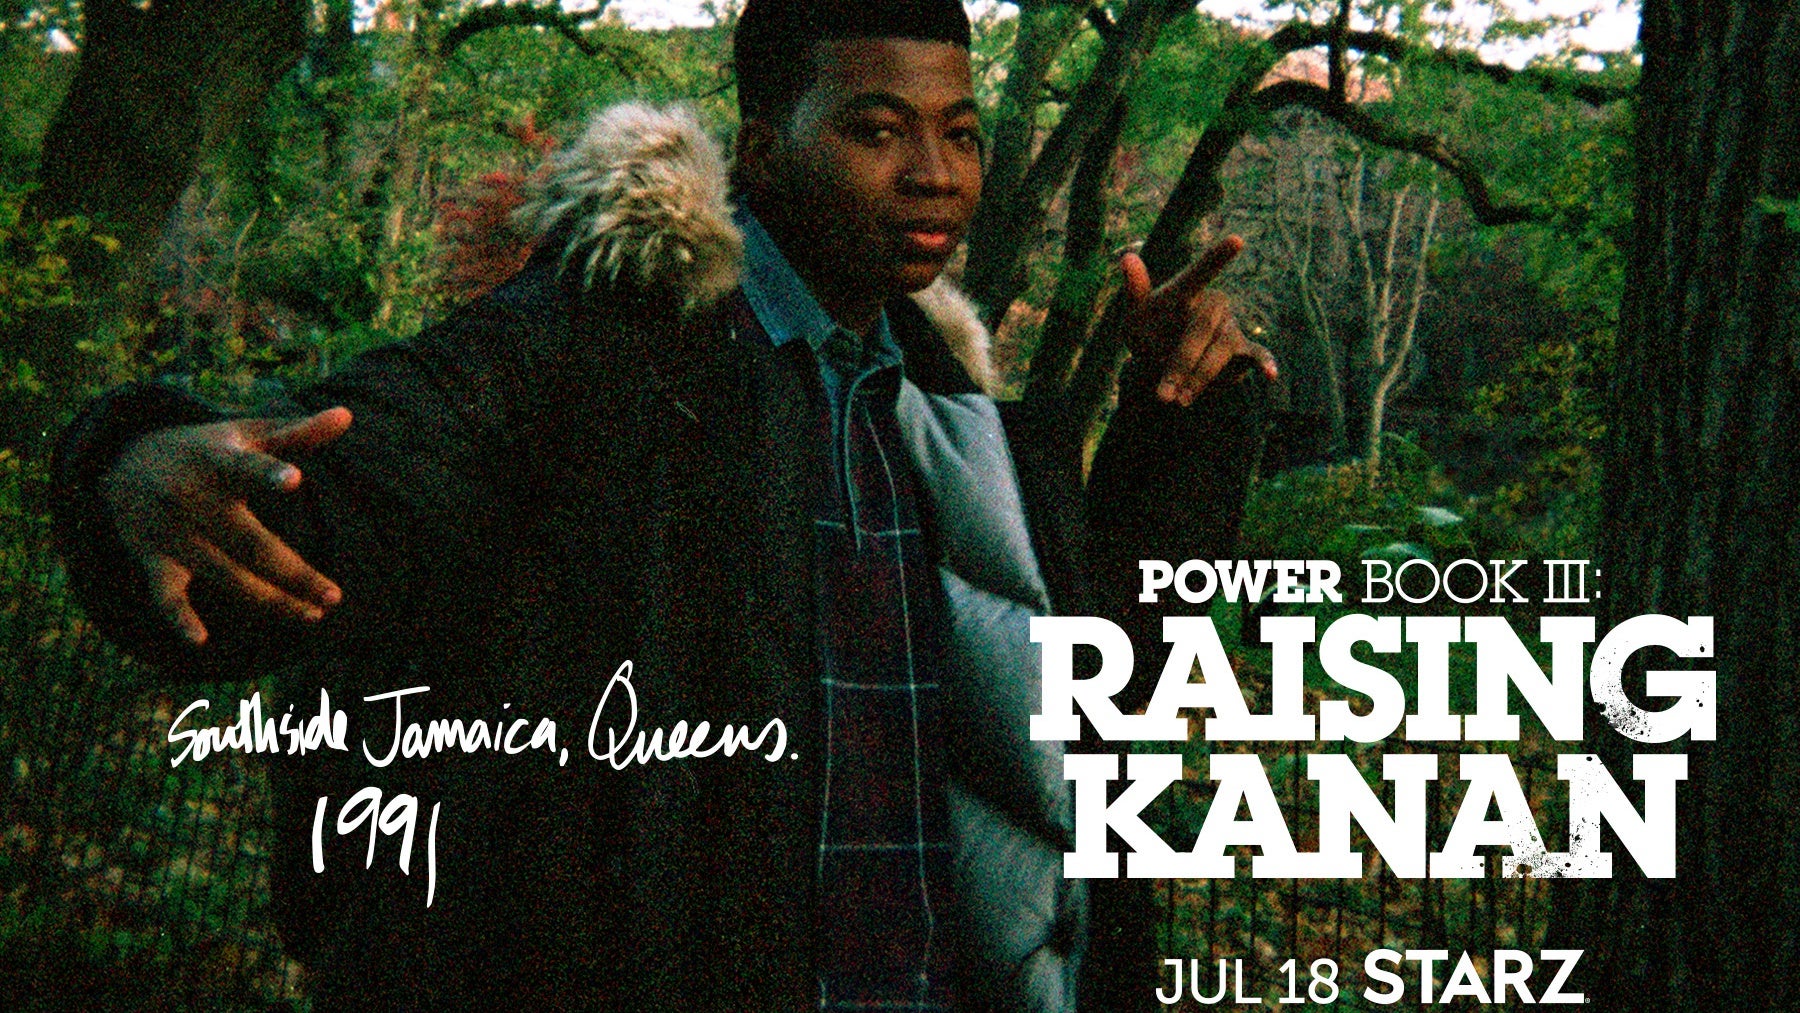 Watch The Official Trailer For STARZ's 'Raising Kanan'